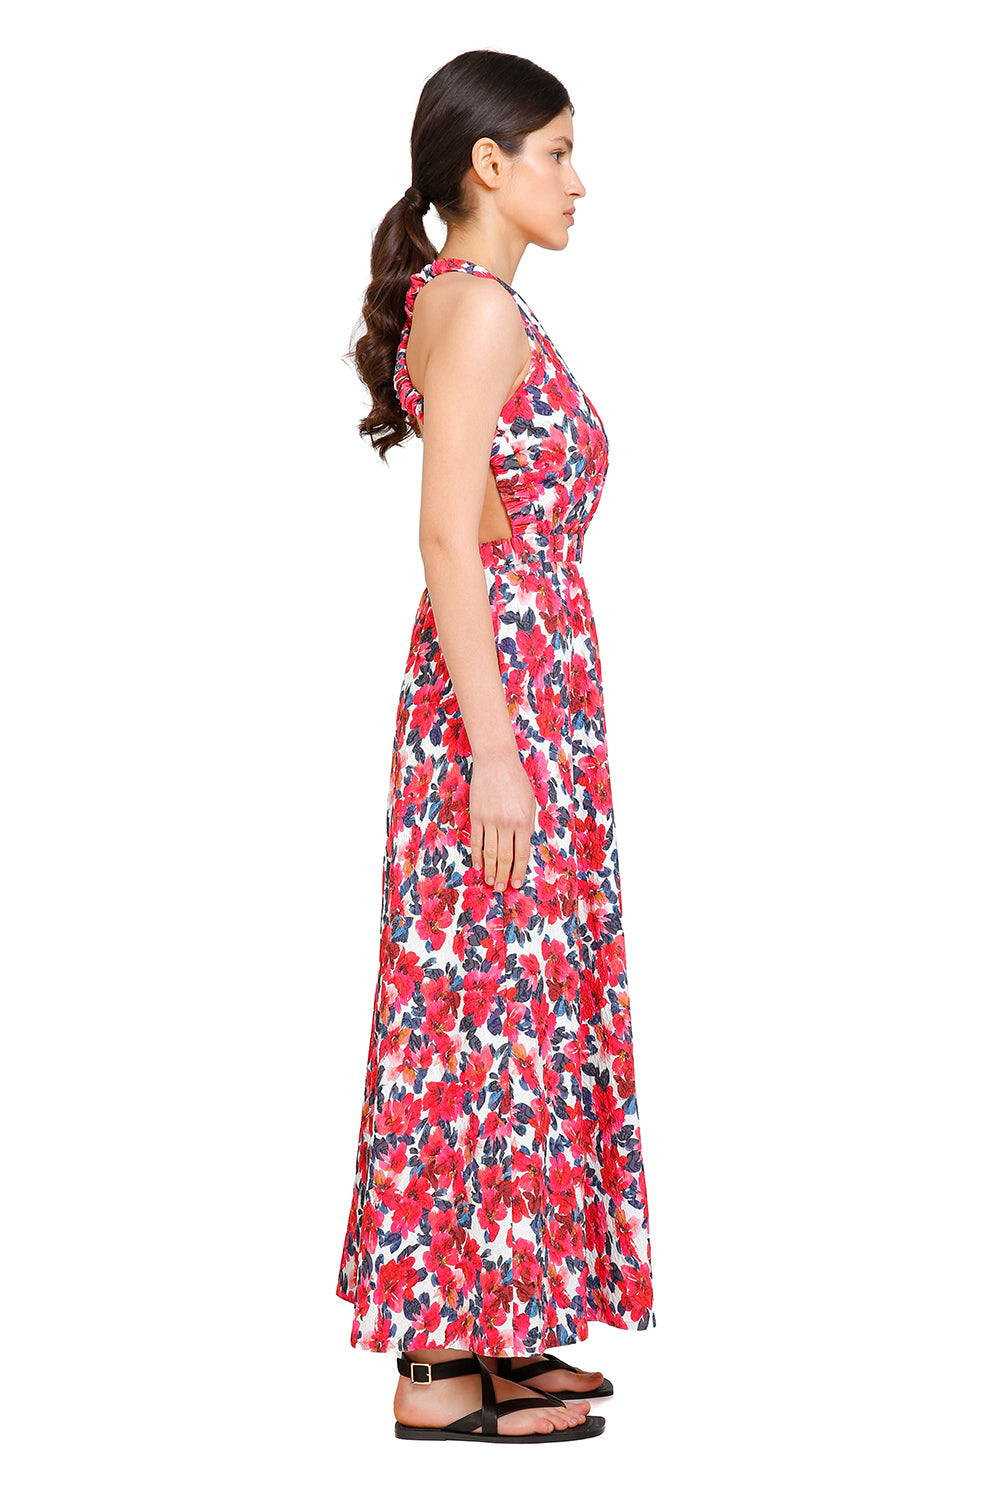 Carmen Flower Print Dress